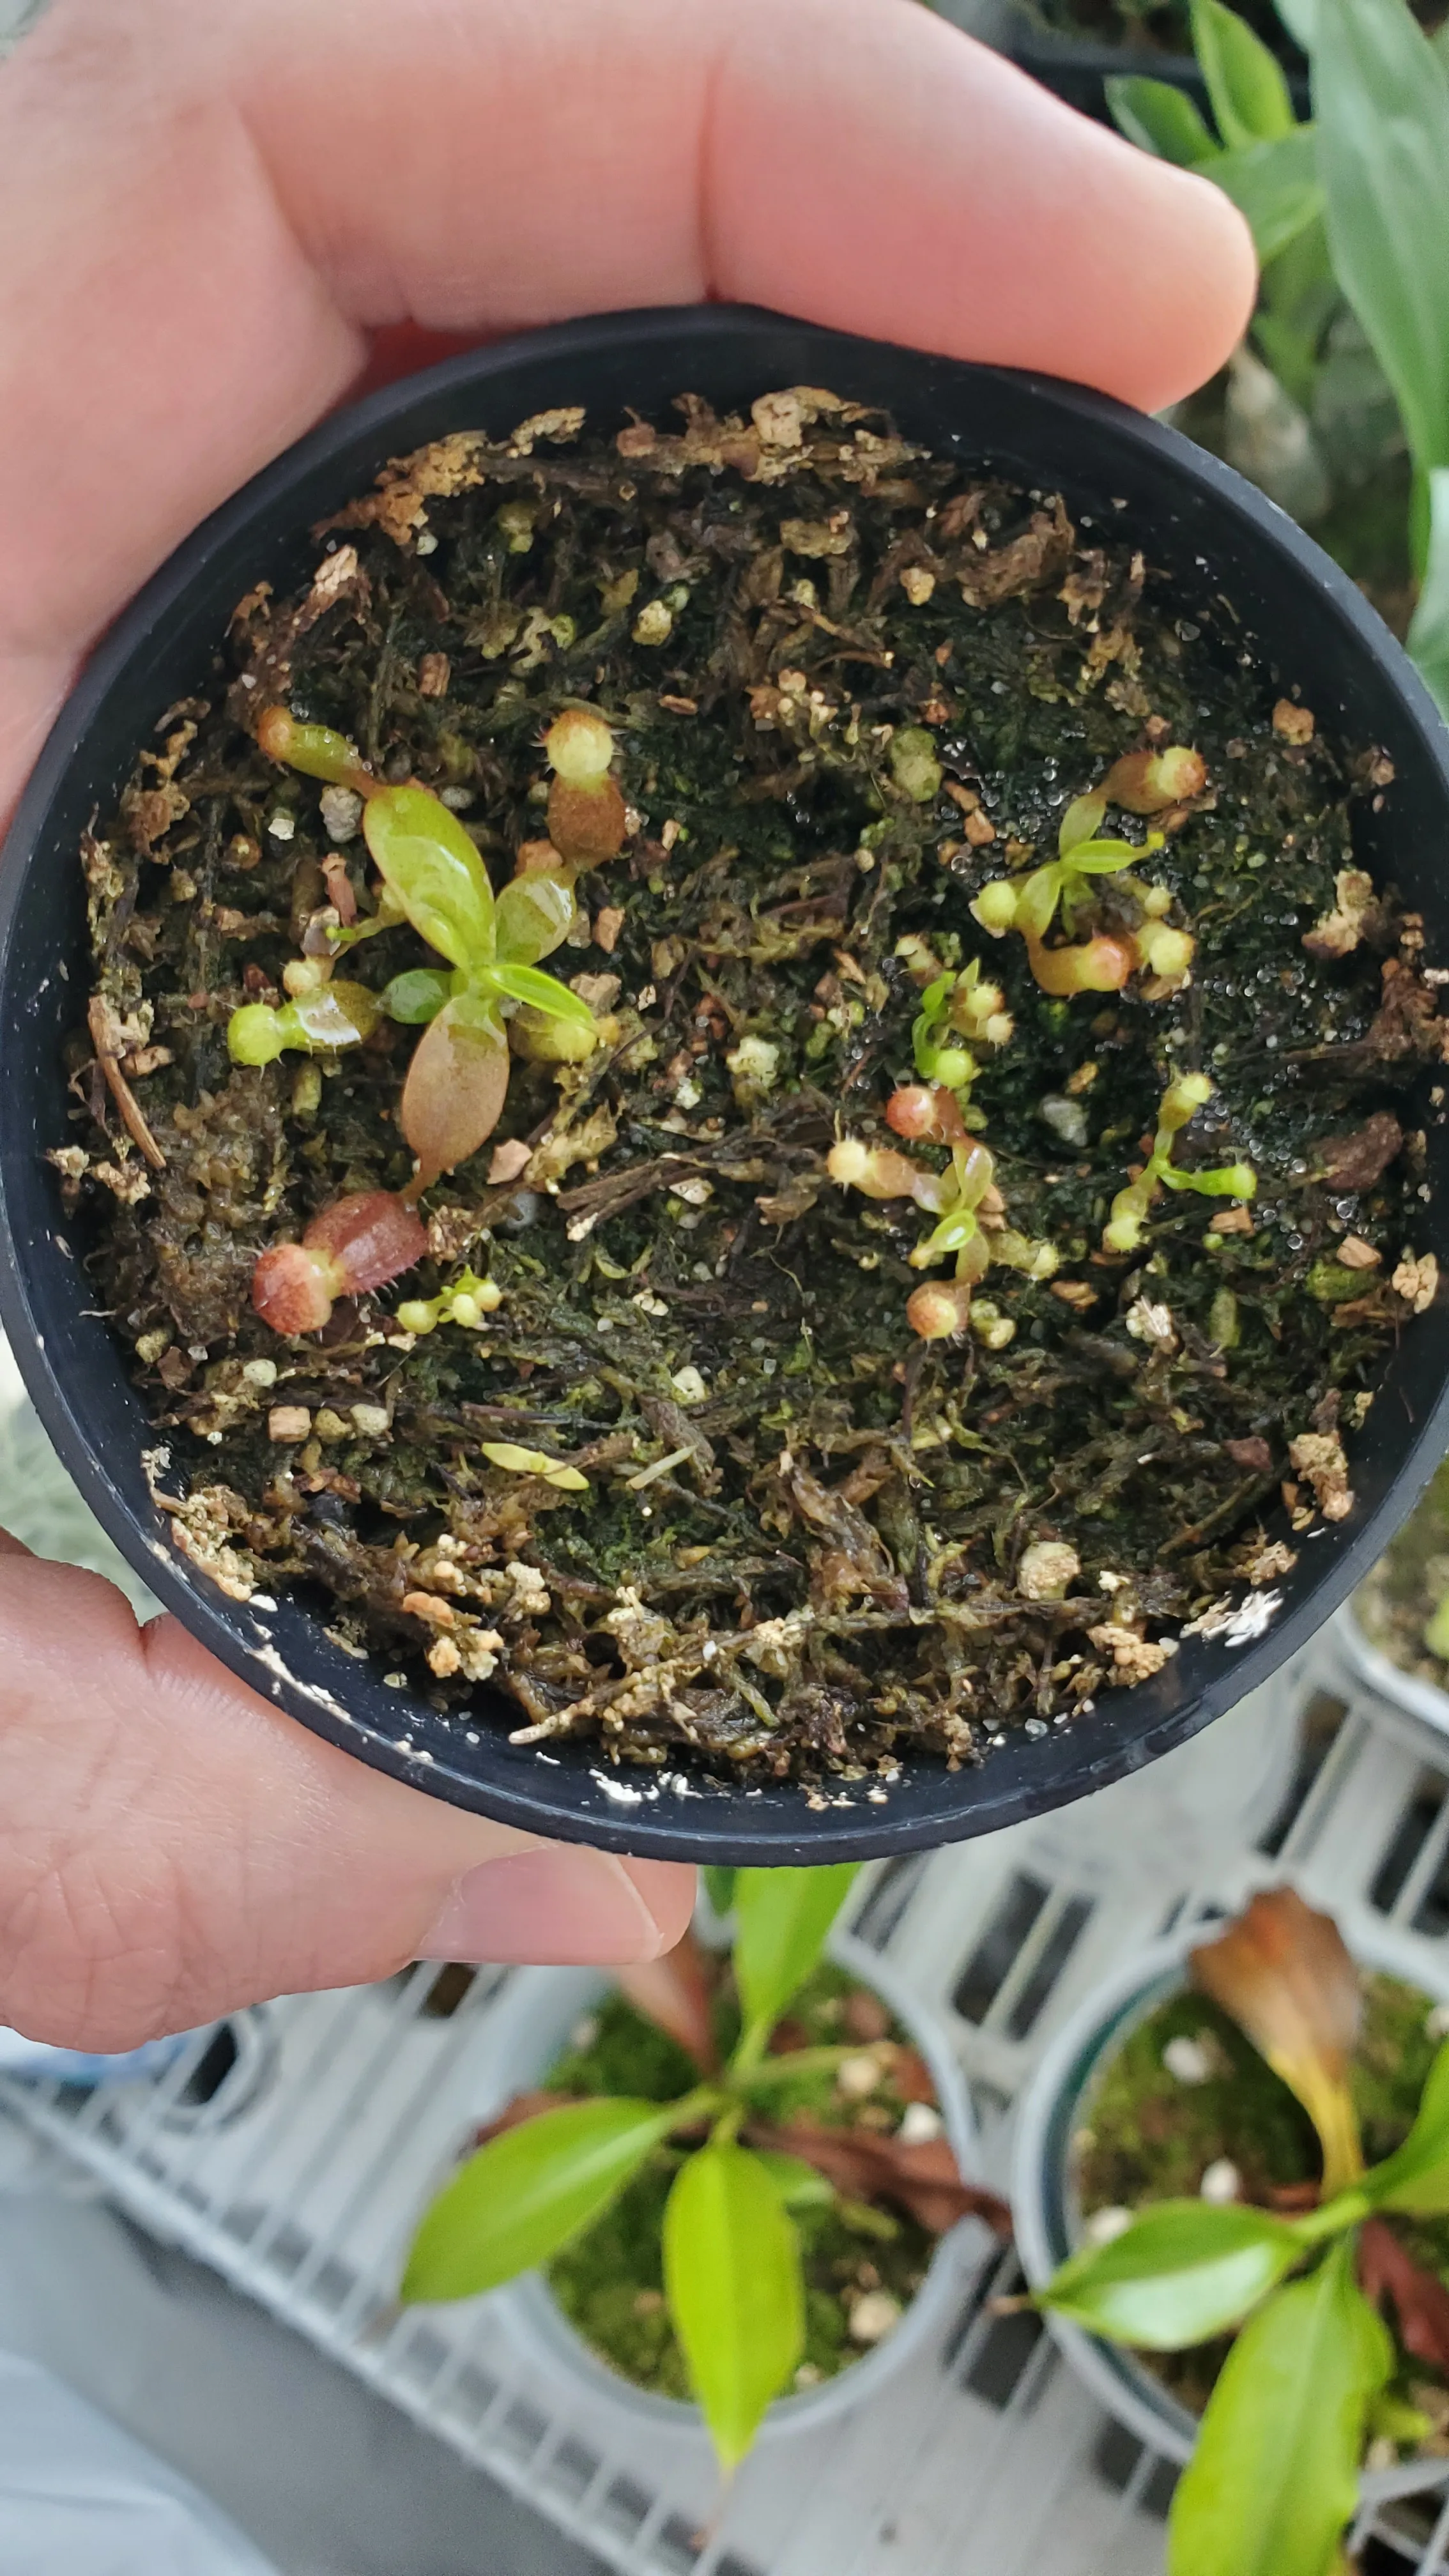 Nepenthes rajah × villosa seedlings